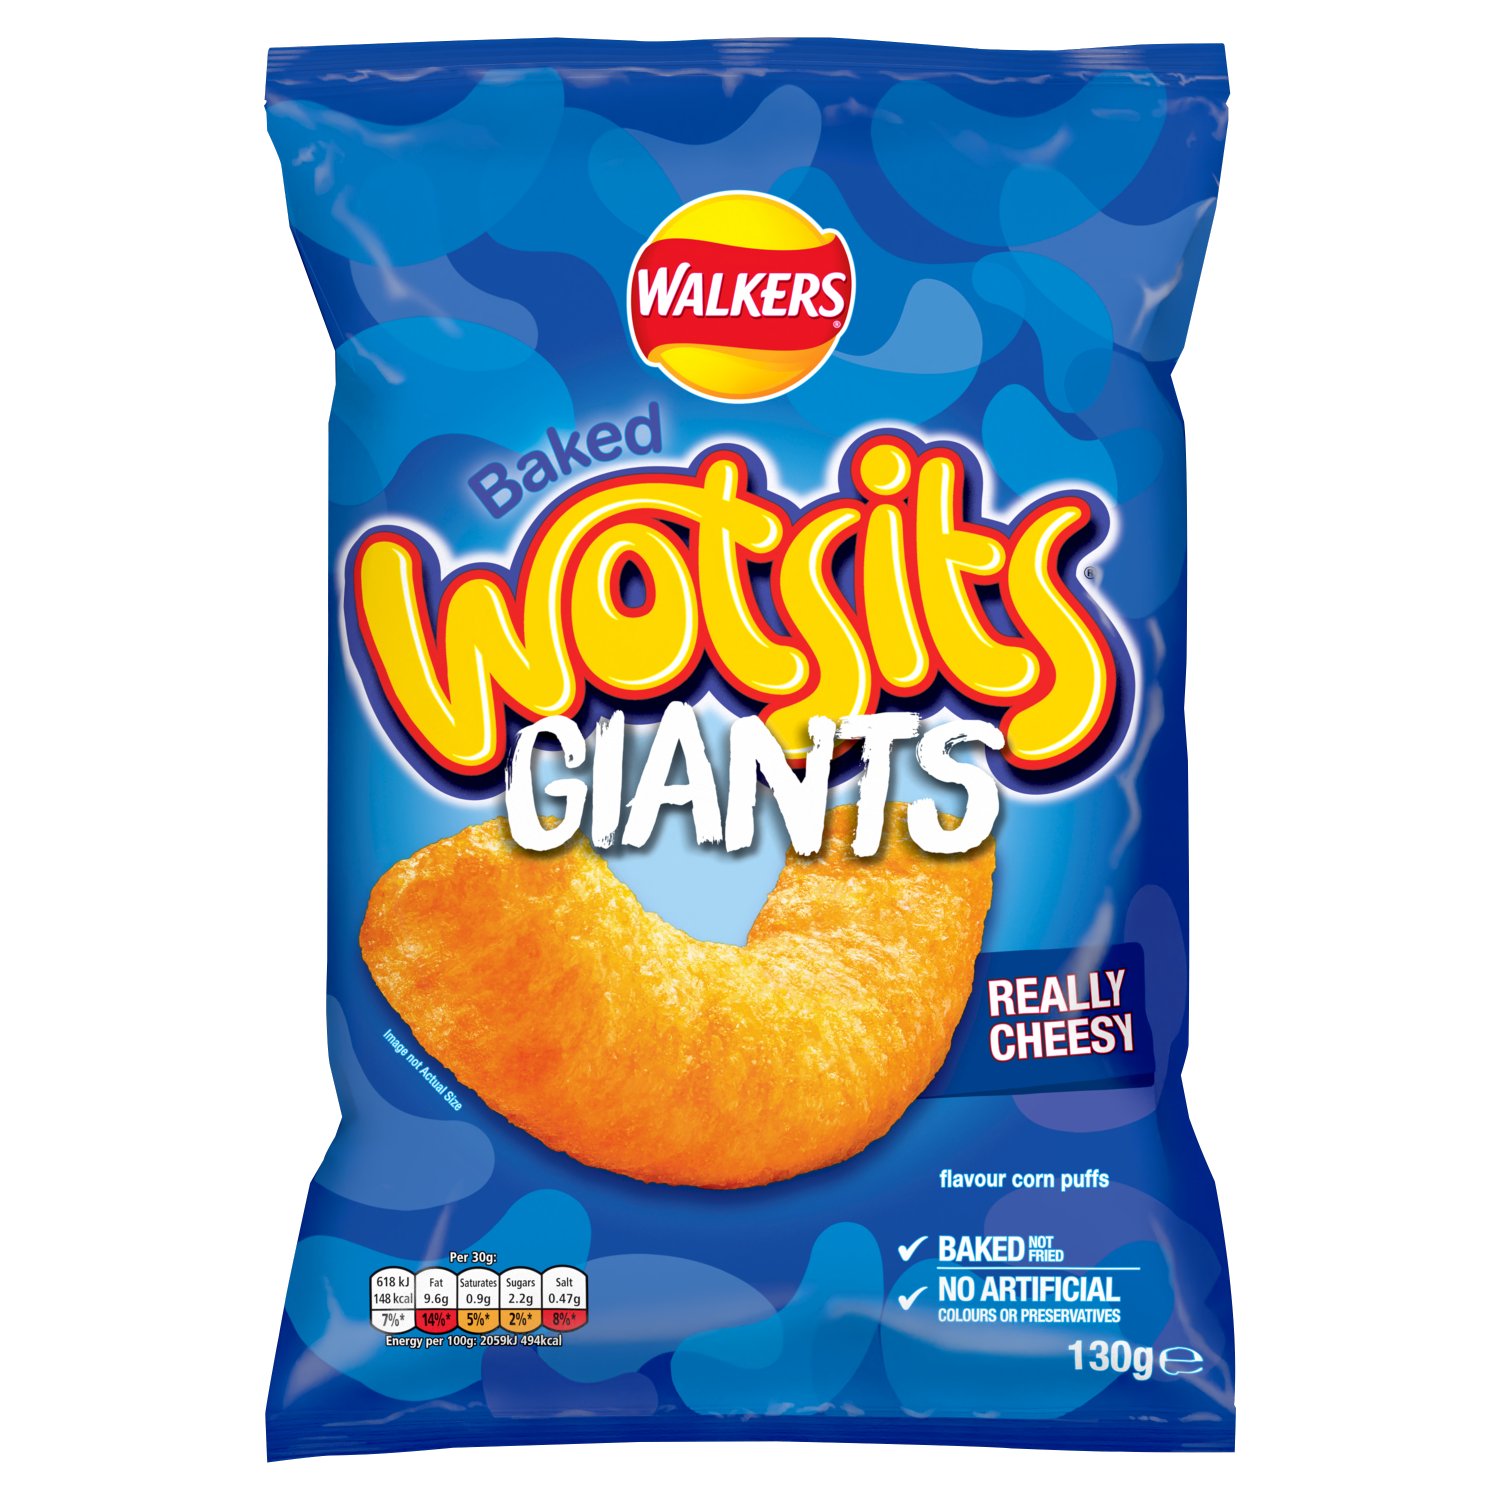 Walkers Baked Wotsits Giants Really Cheesy Bag (130 g)